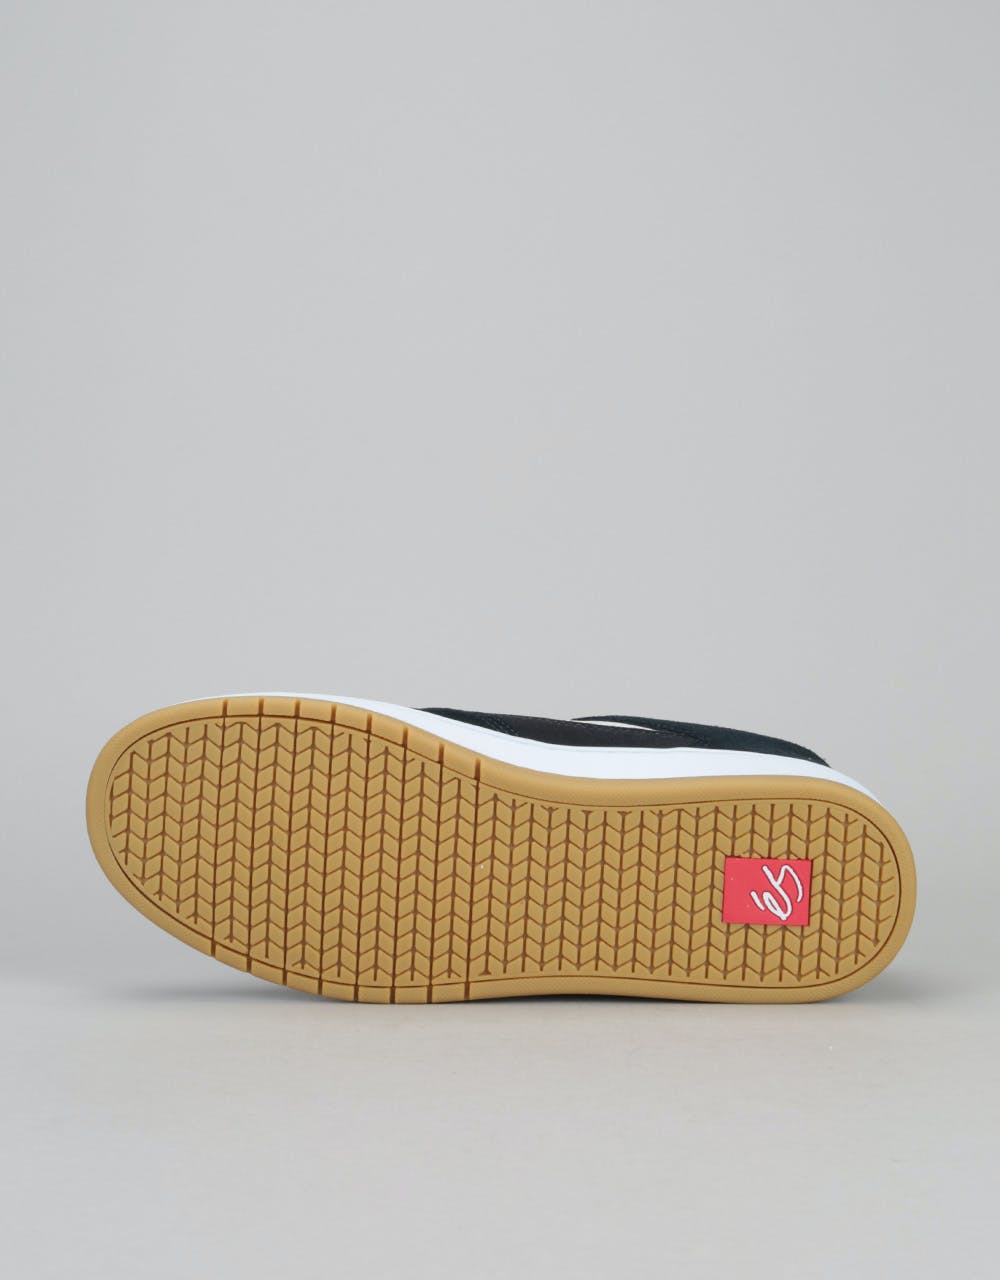 éS Accel Slim Skate Shoes - Navy/White